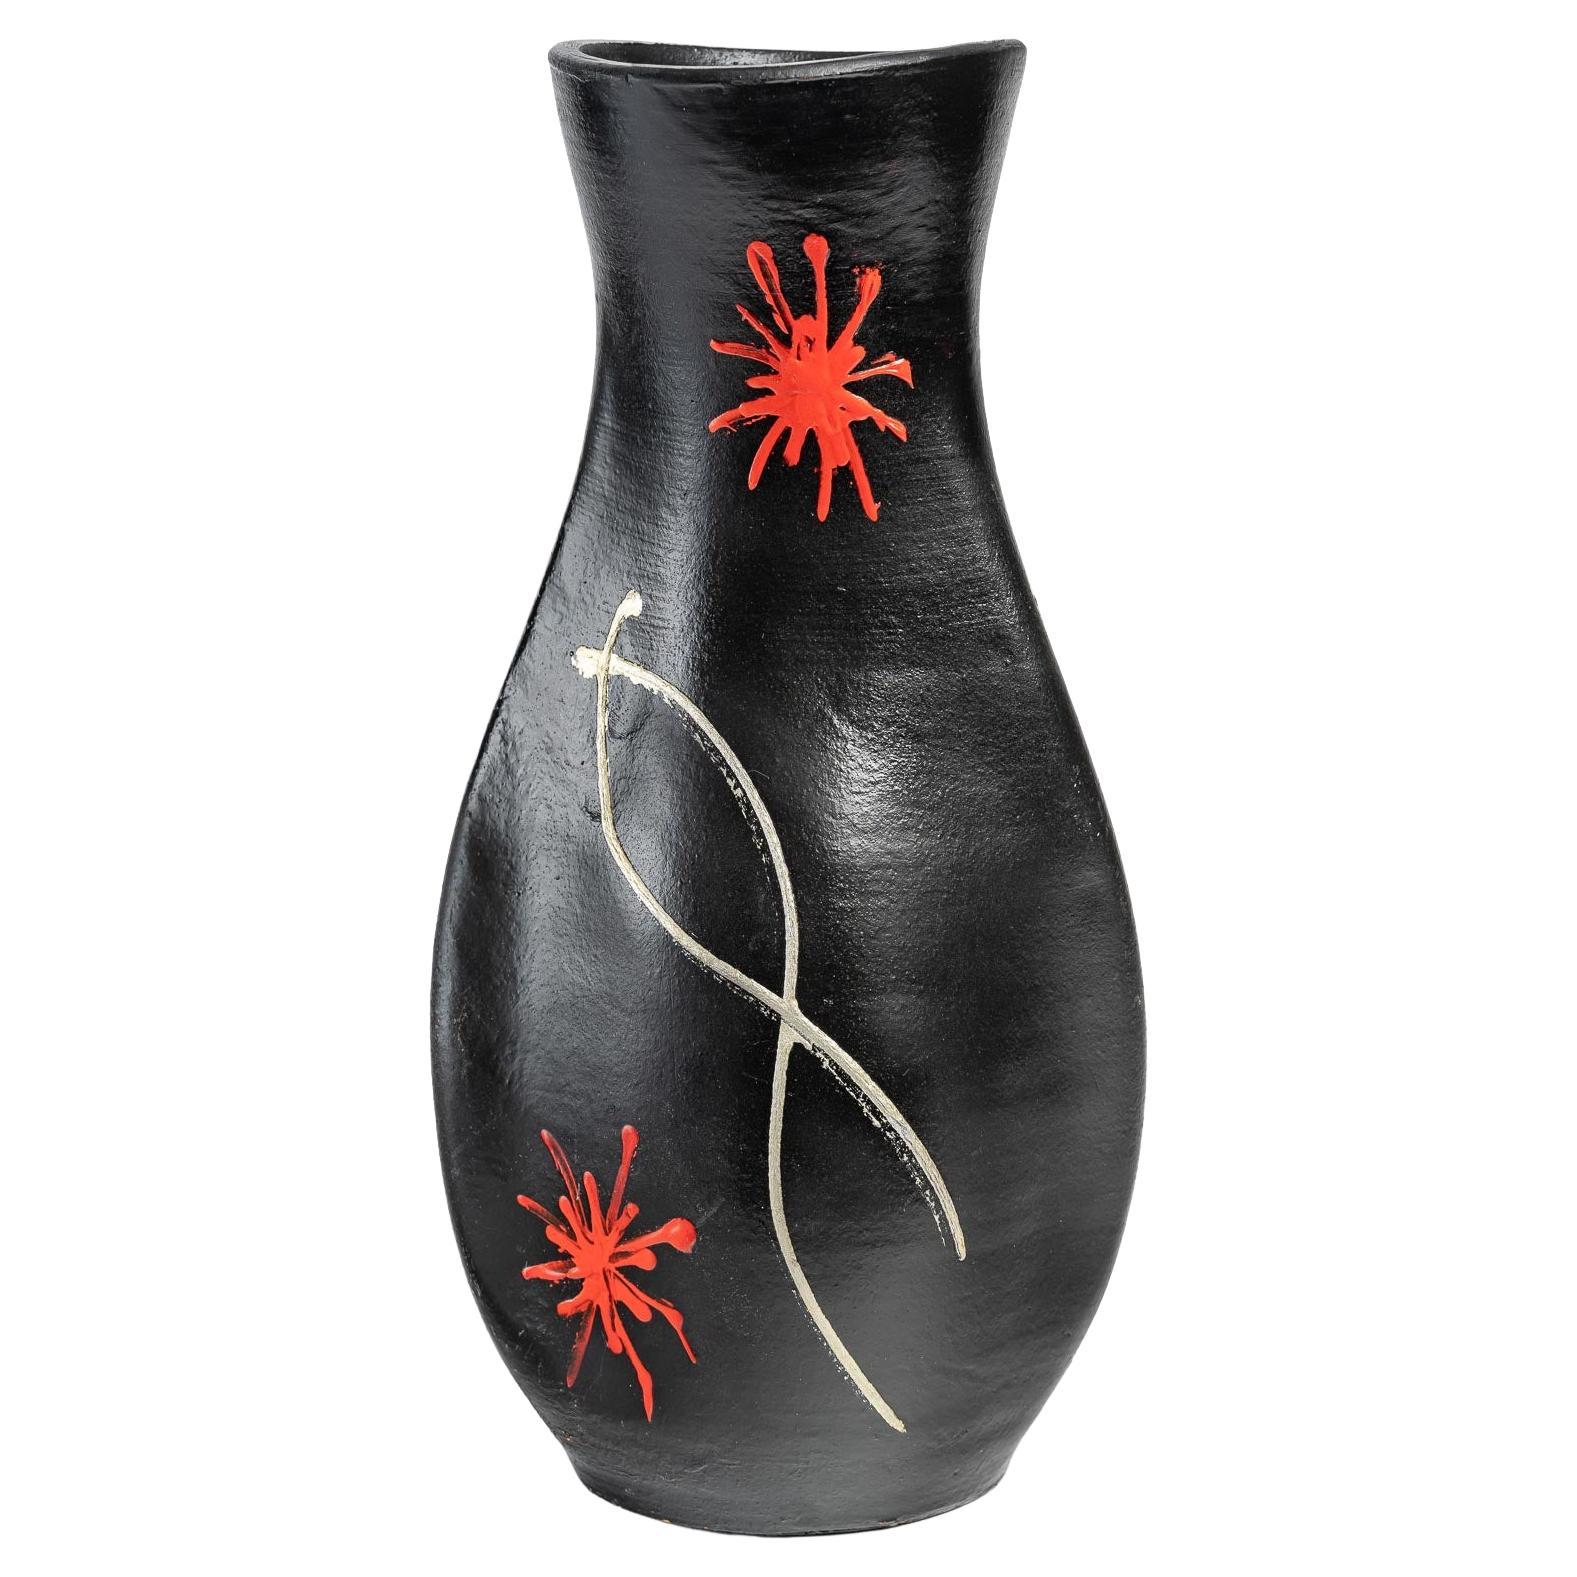 Painted Terracotta Vase, Design 1950-1960